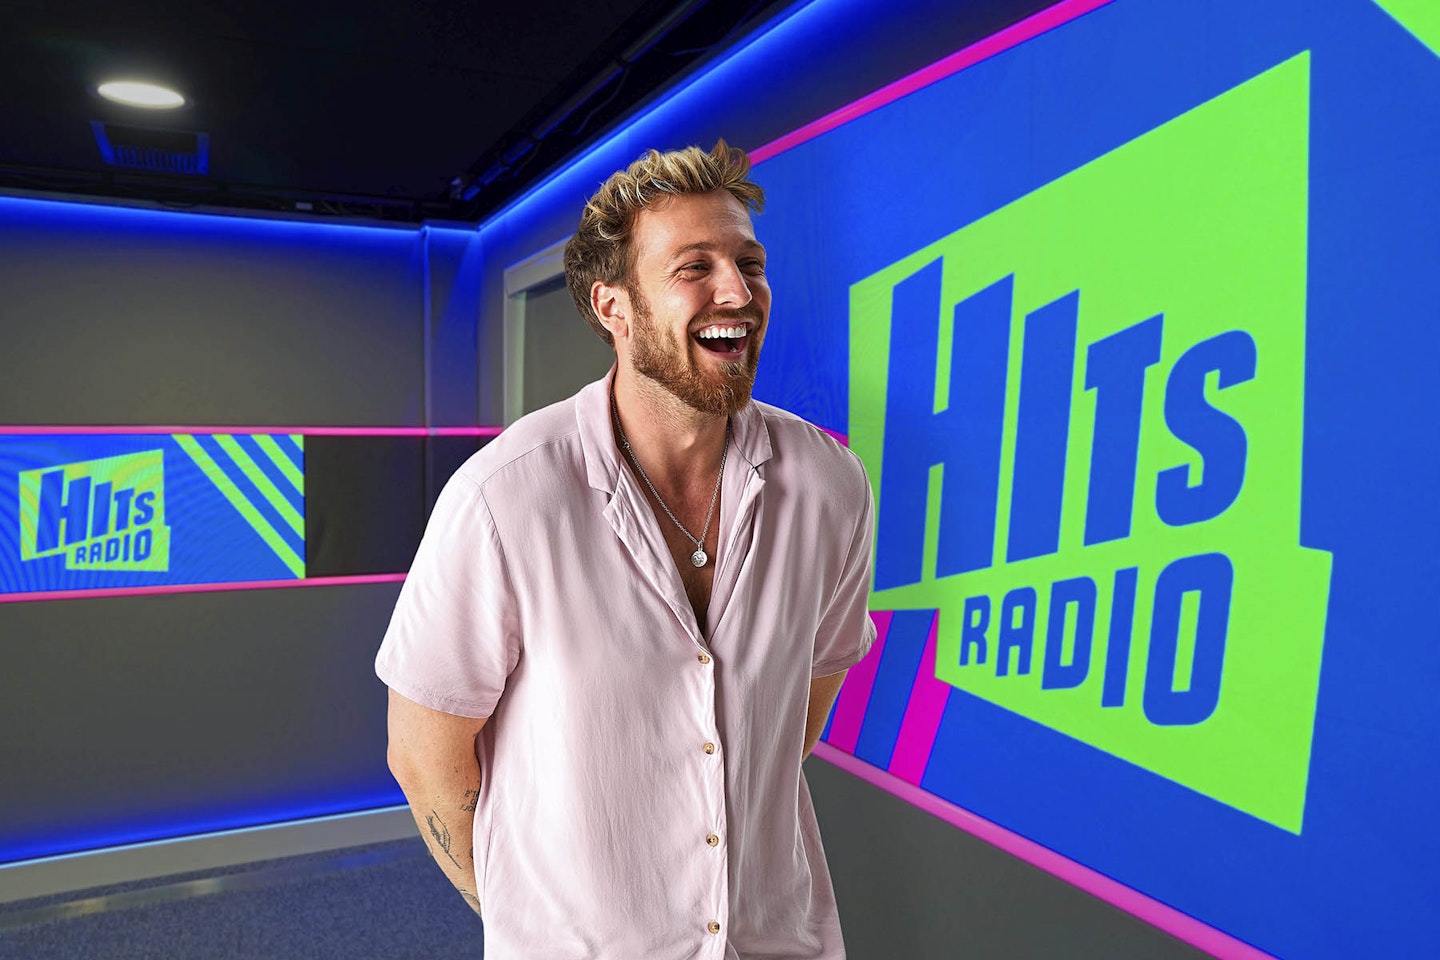 Sam Thompson looks happy stood in front of hits radio branding